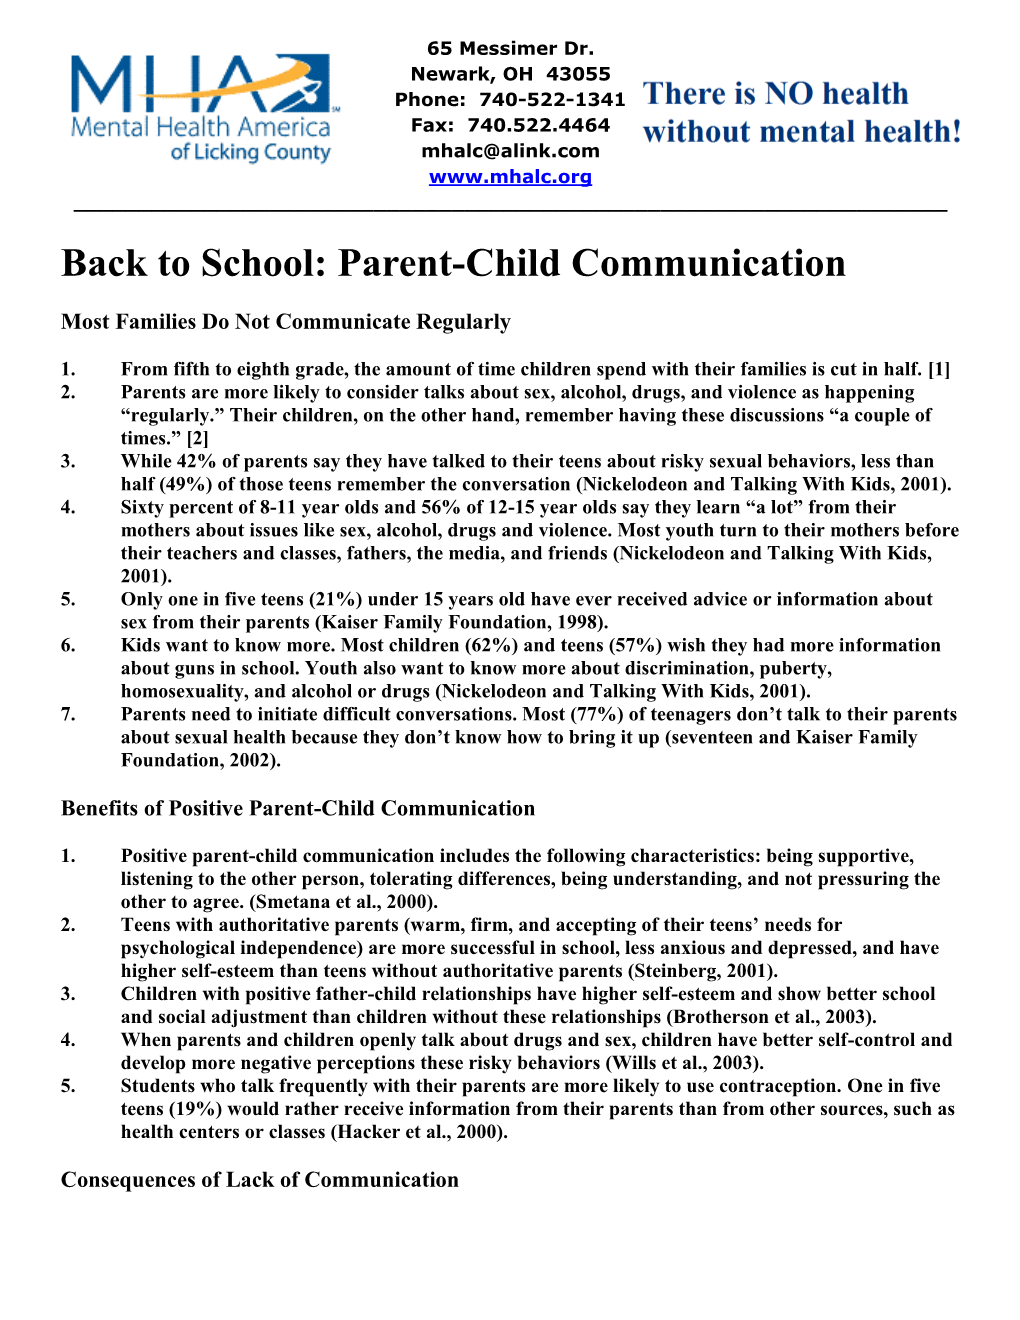 Back to School: Parent-Child Communication